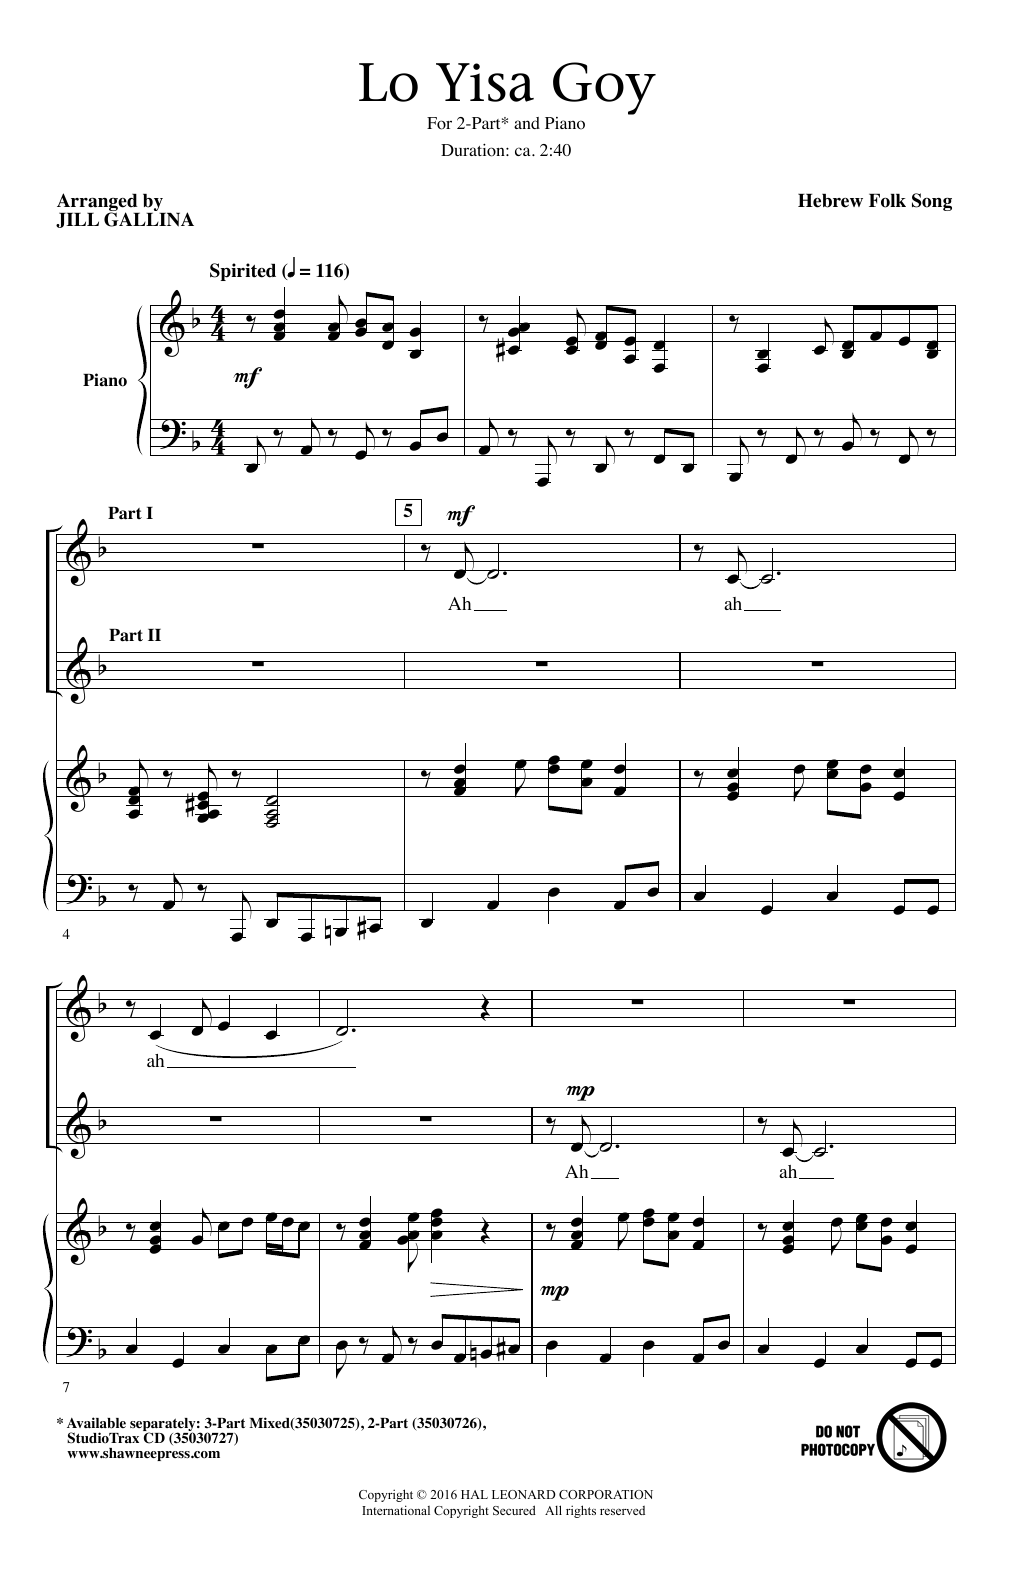 Hebrew Folk Song Lo Yisa Goy (arr. Jill Gallina) Sheet Music Notes & Chords for 2-Part Choir - Download or Print PDF